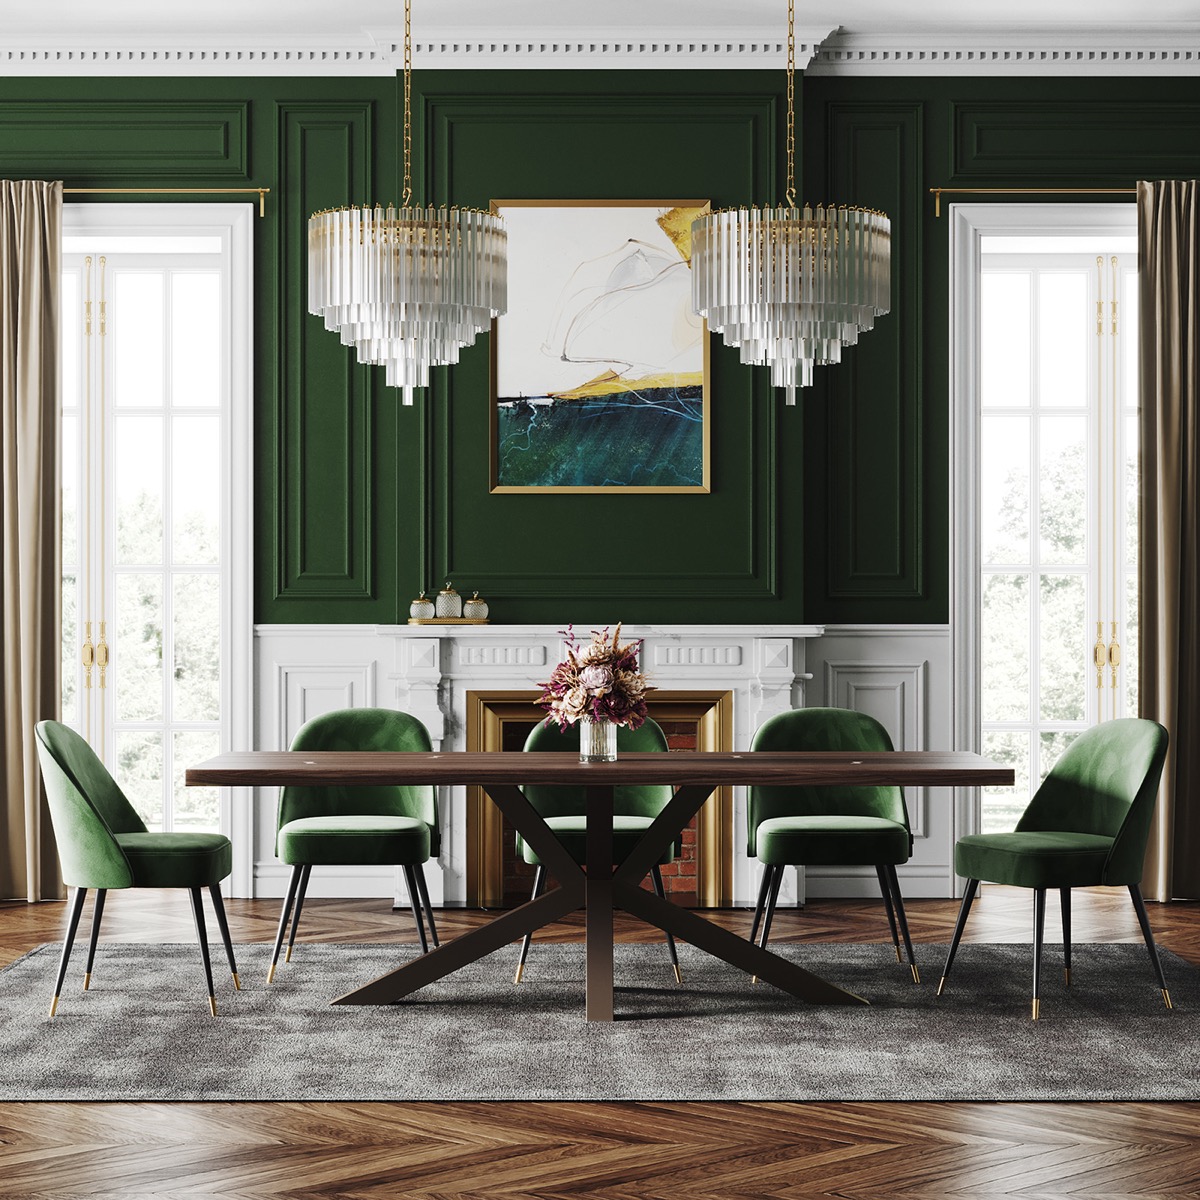 green-dining-chair-600x600.jpg